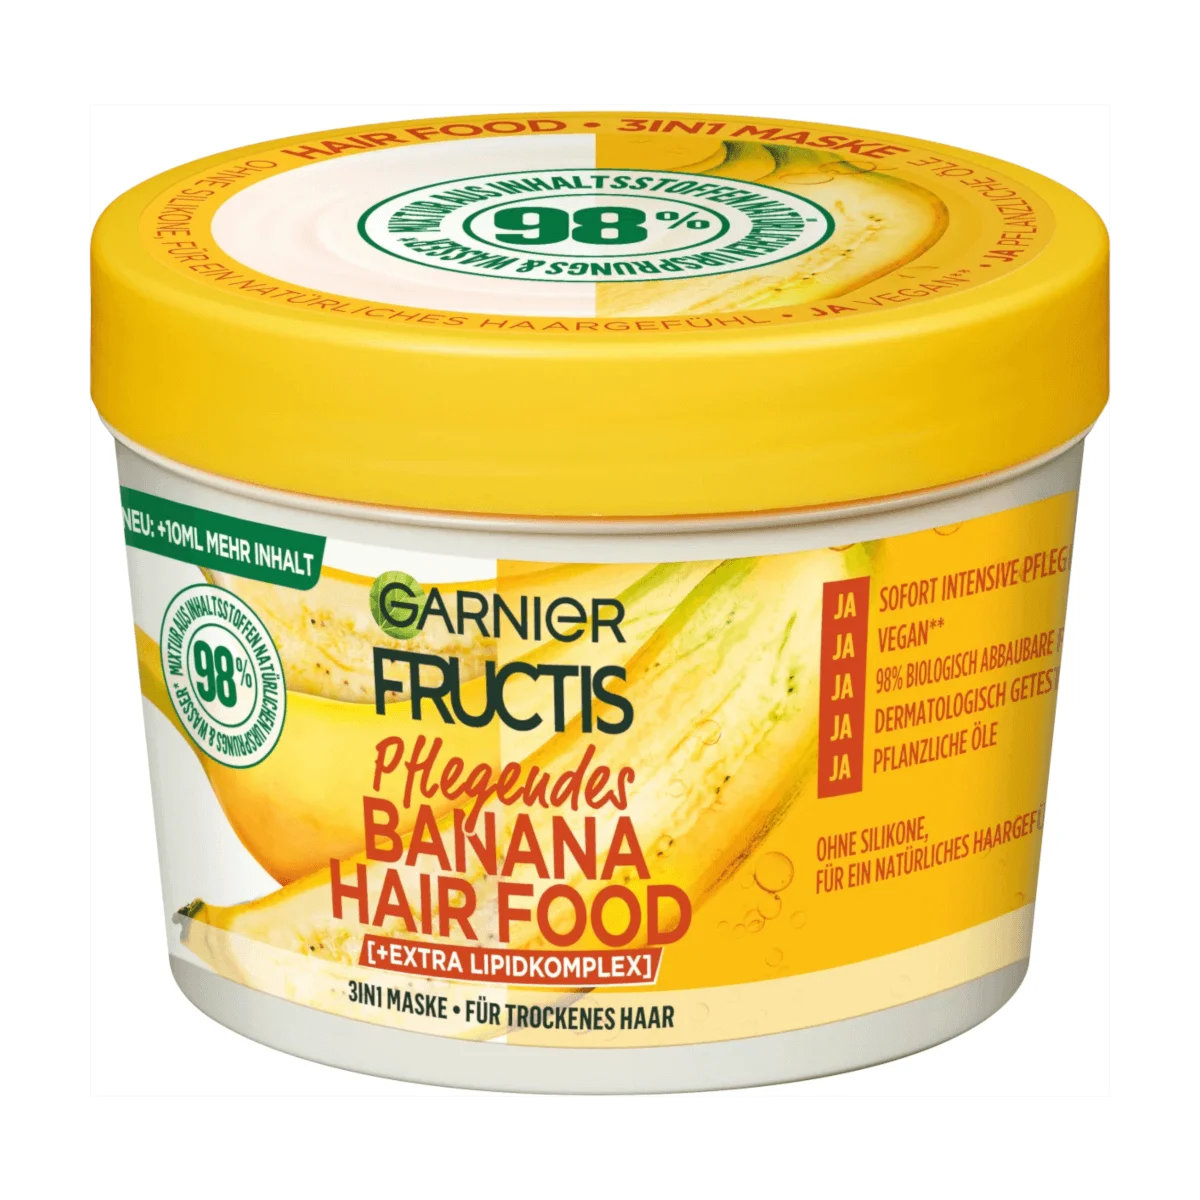 Garnier Fructis Haarkur Banana Hair Food 3in1 Maske, 400 ml